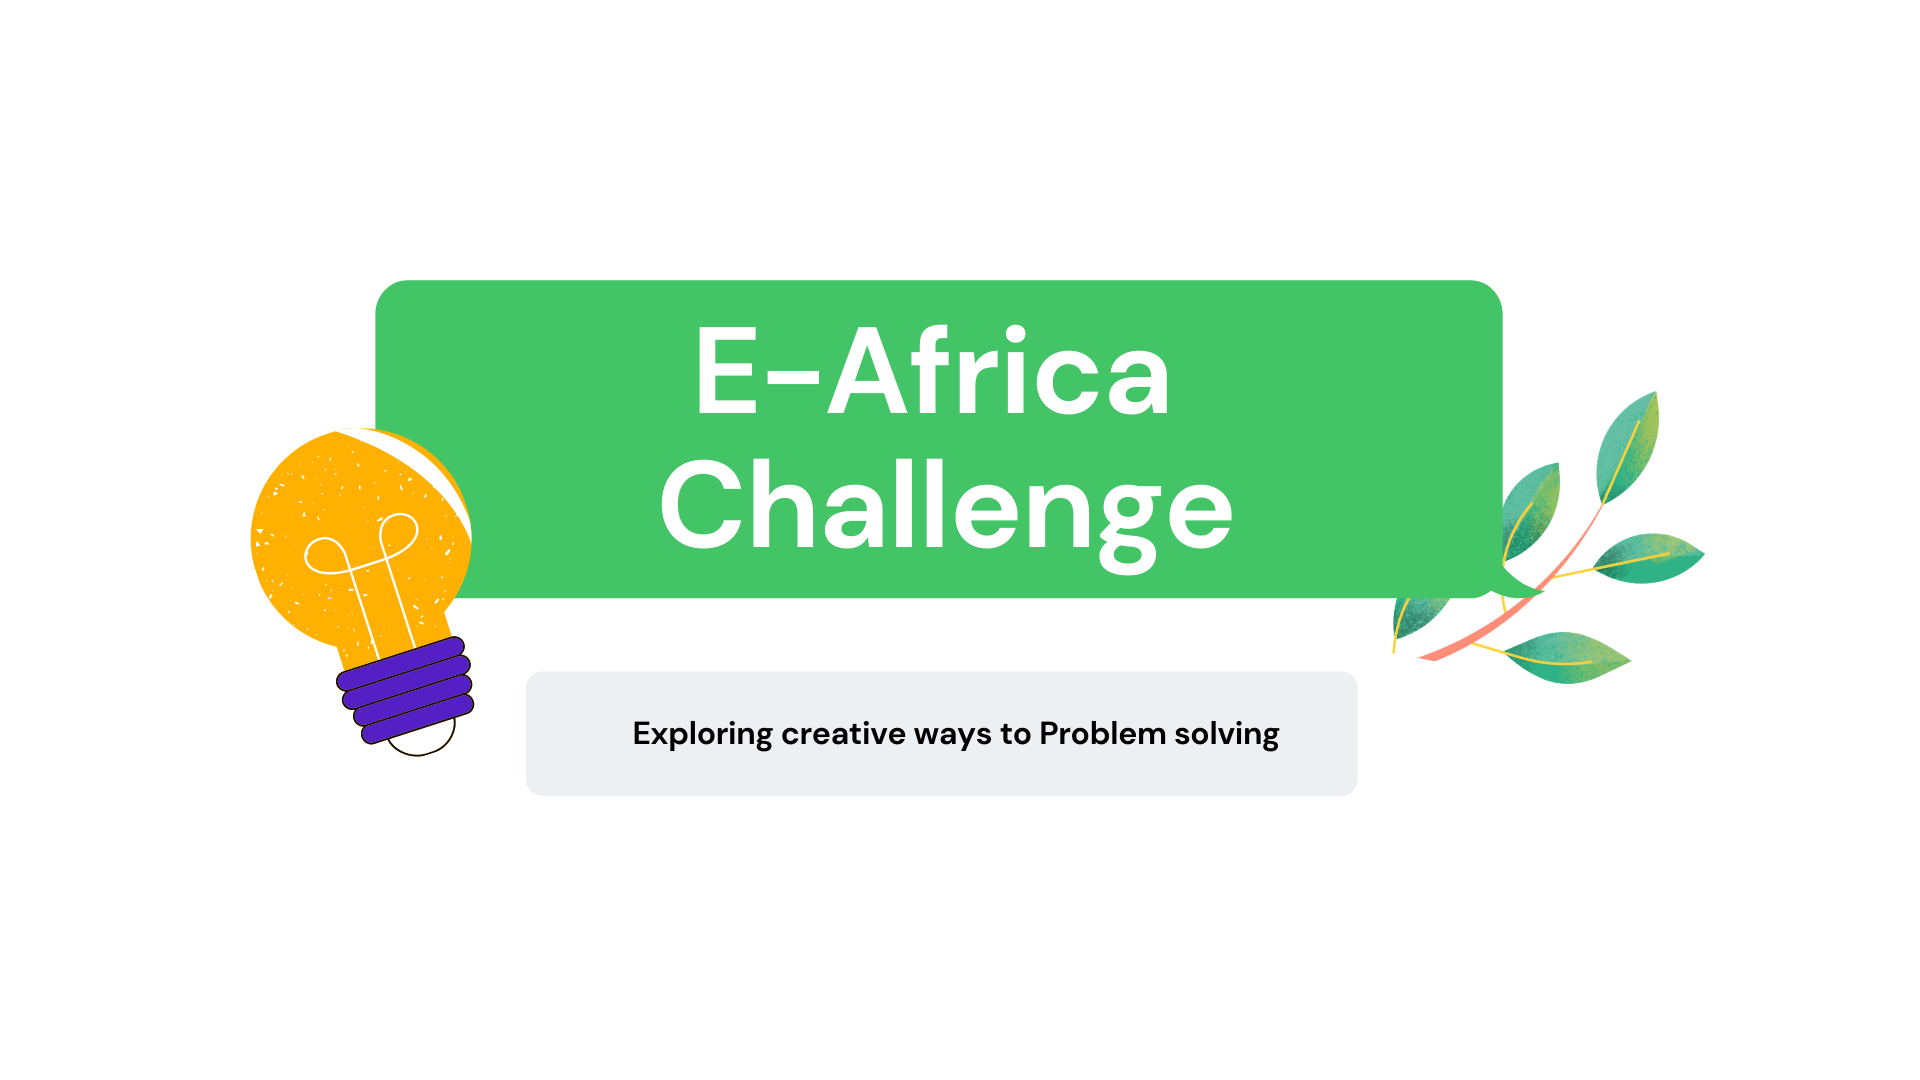 E-Africa challenge